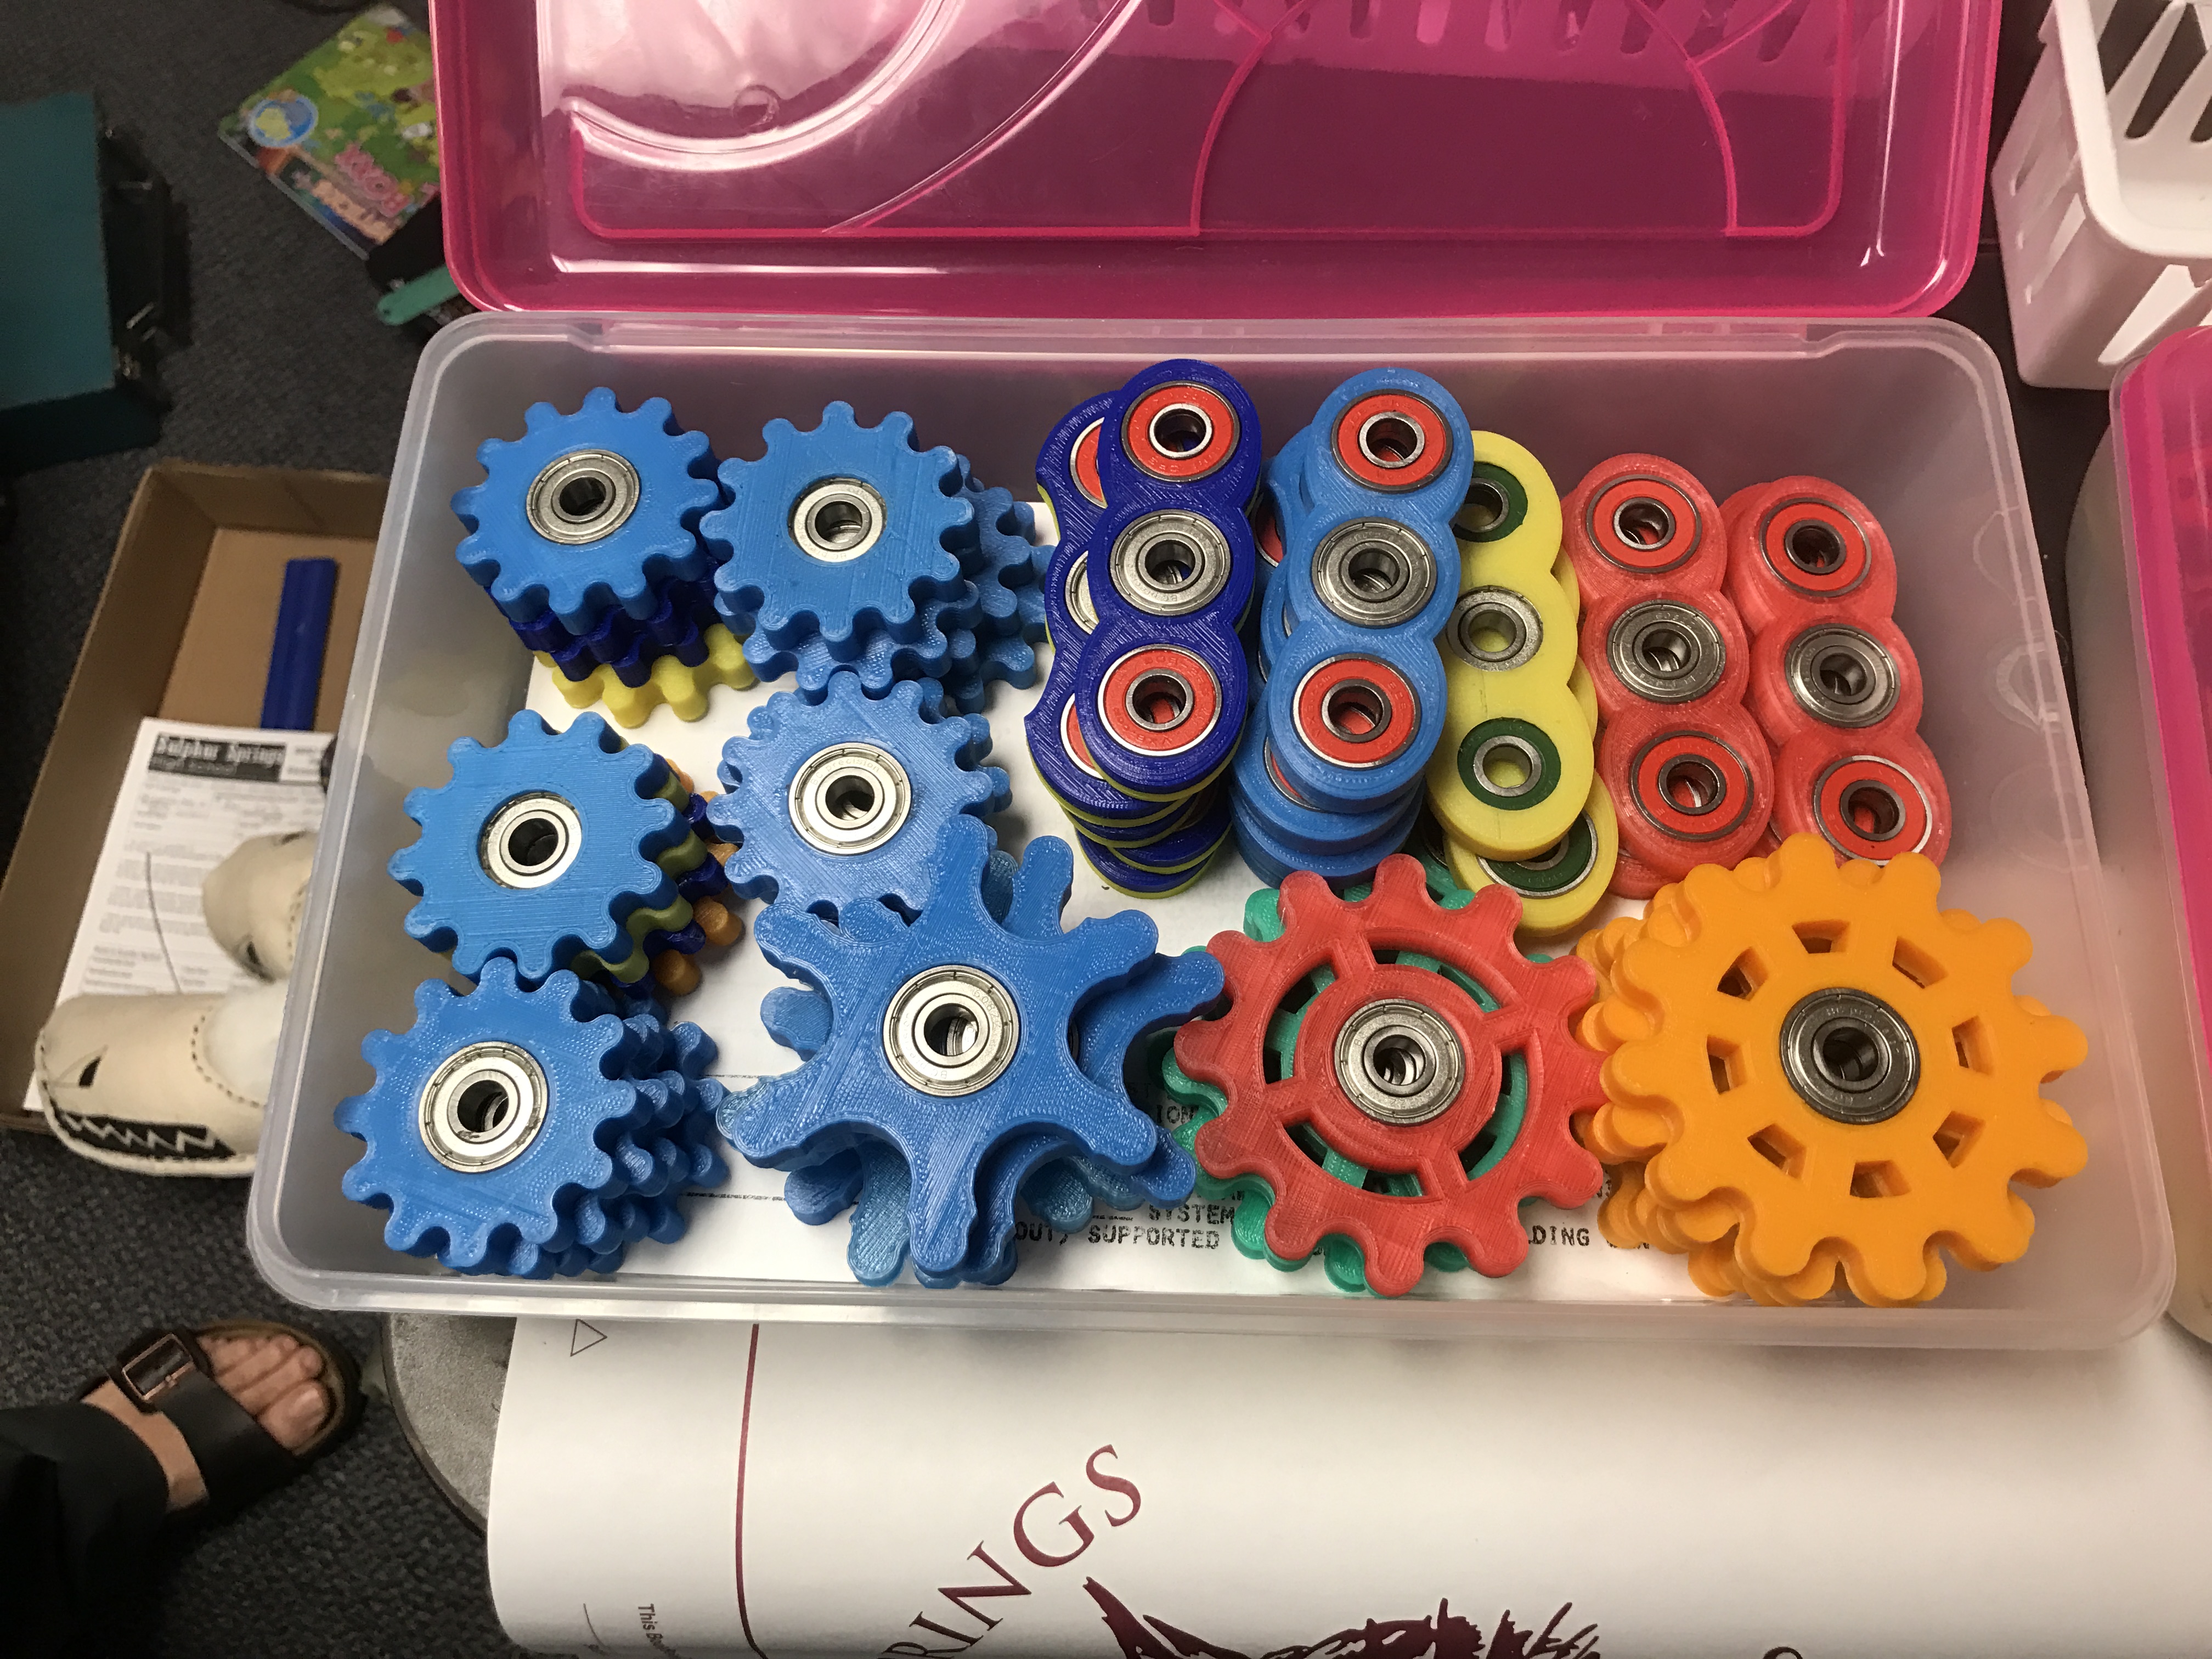 SSHS Art Department Using 3D Printer to Make Popular Fidget Spinners